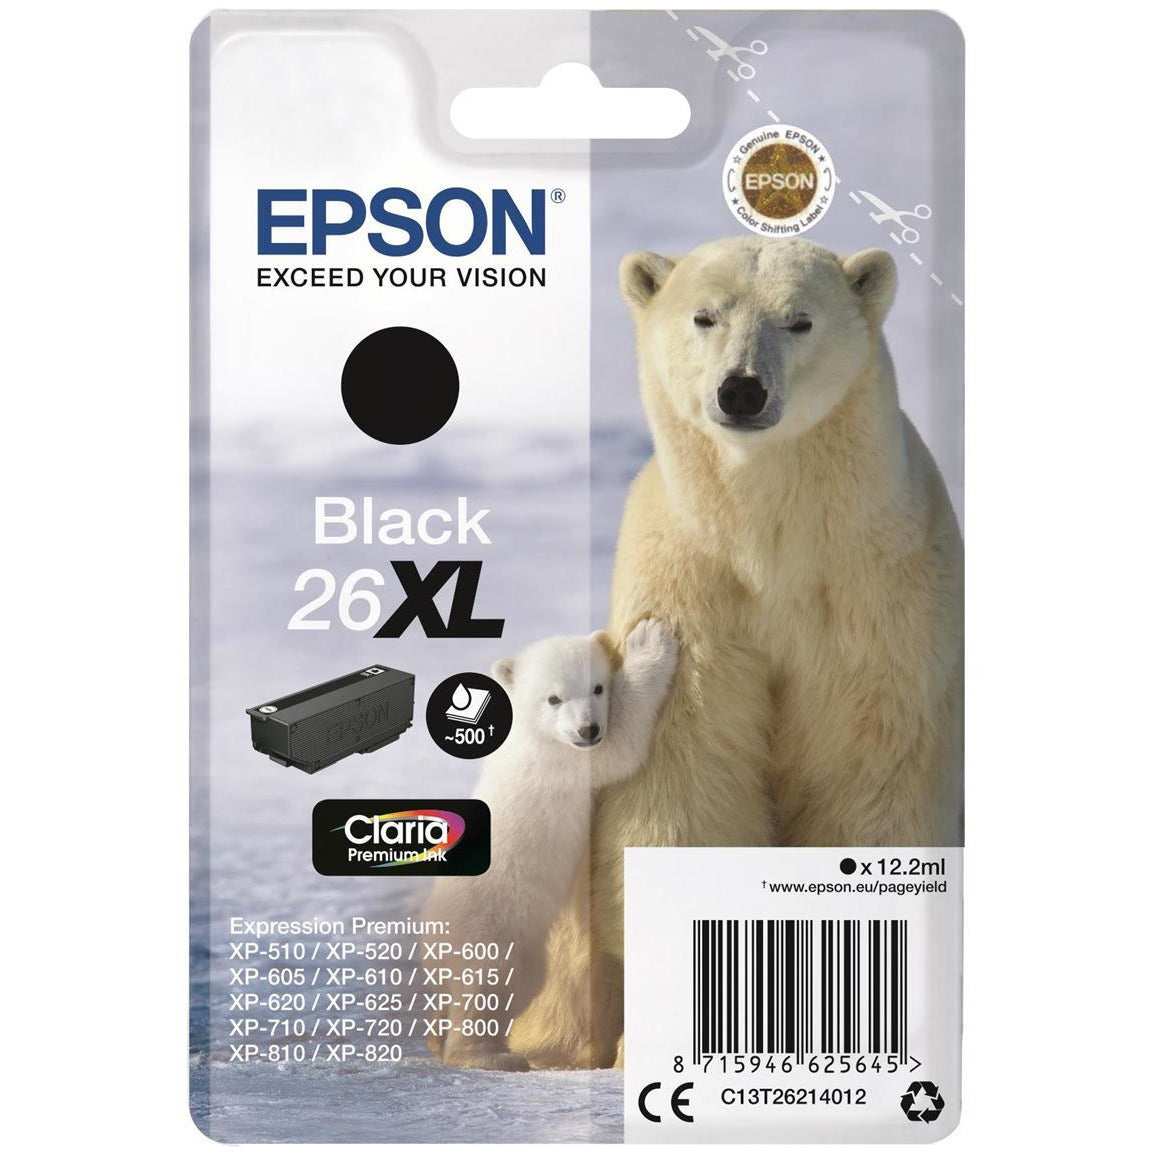 Epson Polar Bear 26XL (Prentar 500 síður) svart Claria Premium blekhylki (Non Tagged) fyrir Expression Premium XP-600/XP-605/XP-700/XP-800 All-in-One Inkjet Printers